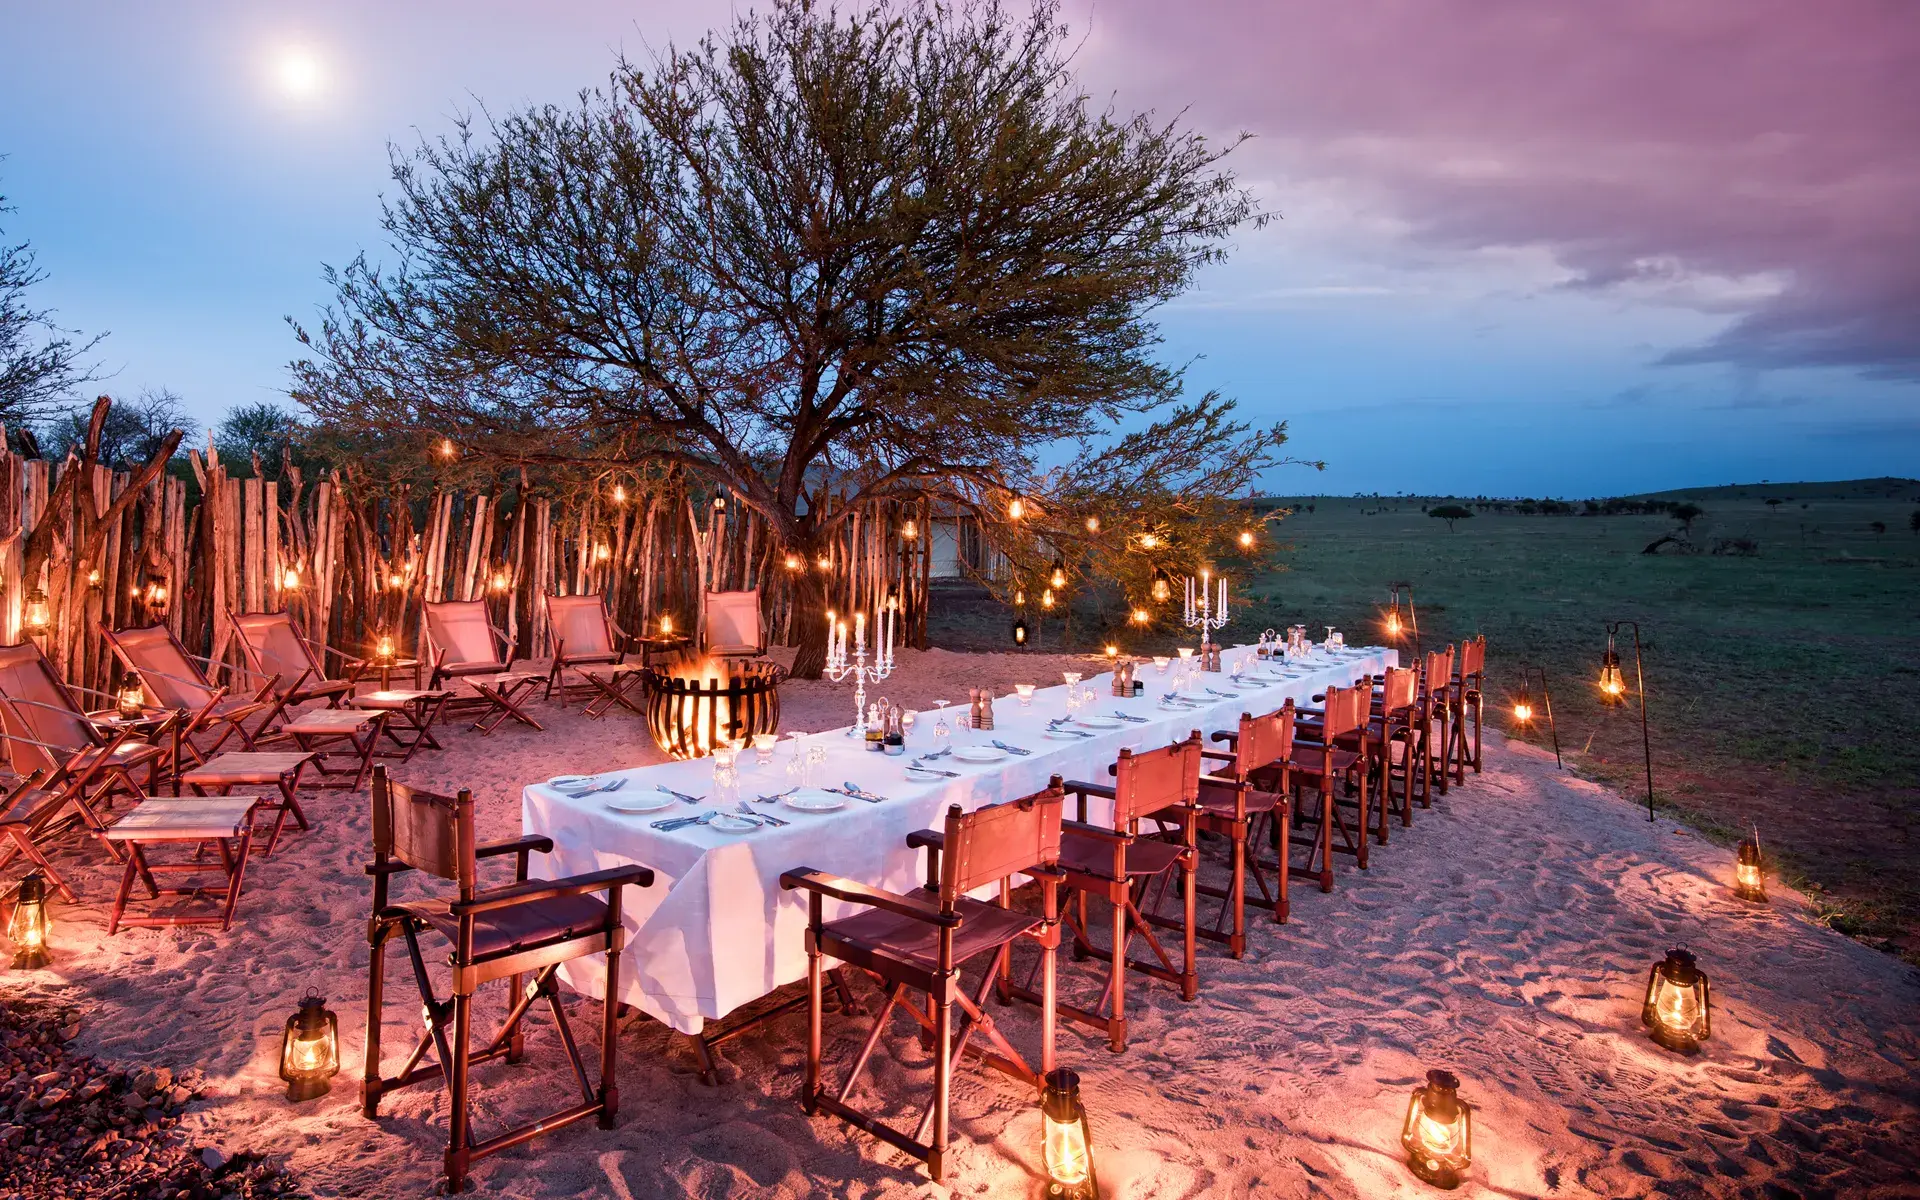 Bush Dinner on a luxury African safari